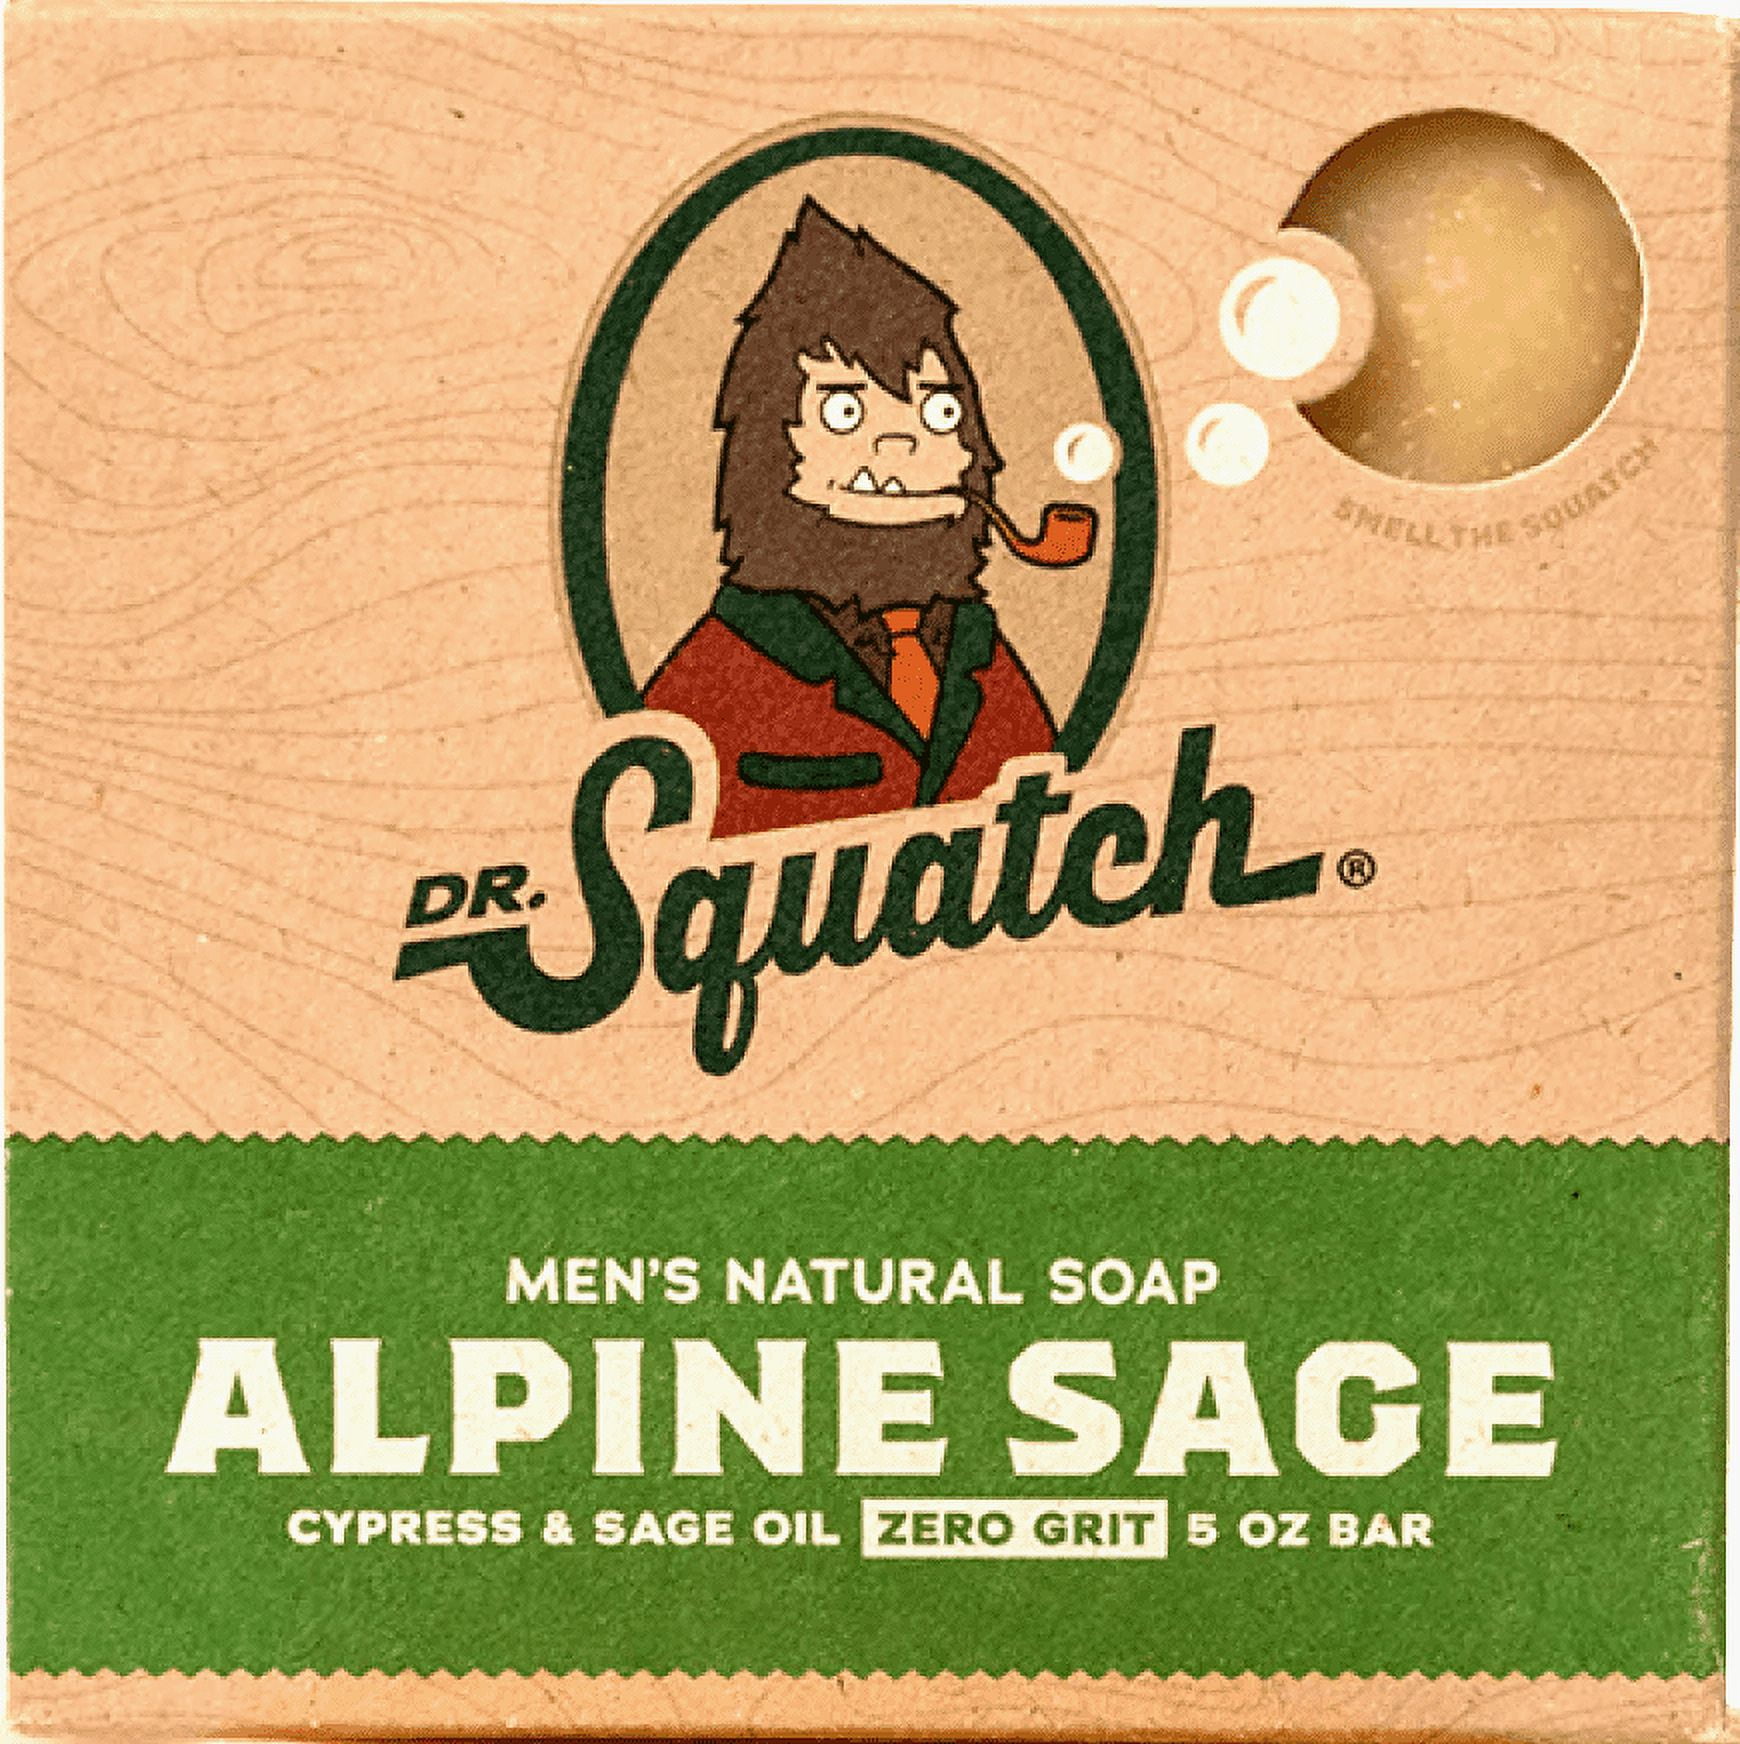 Dr. Squatch Alpine Sage Bar Soap